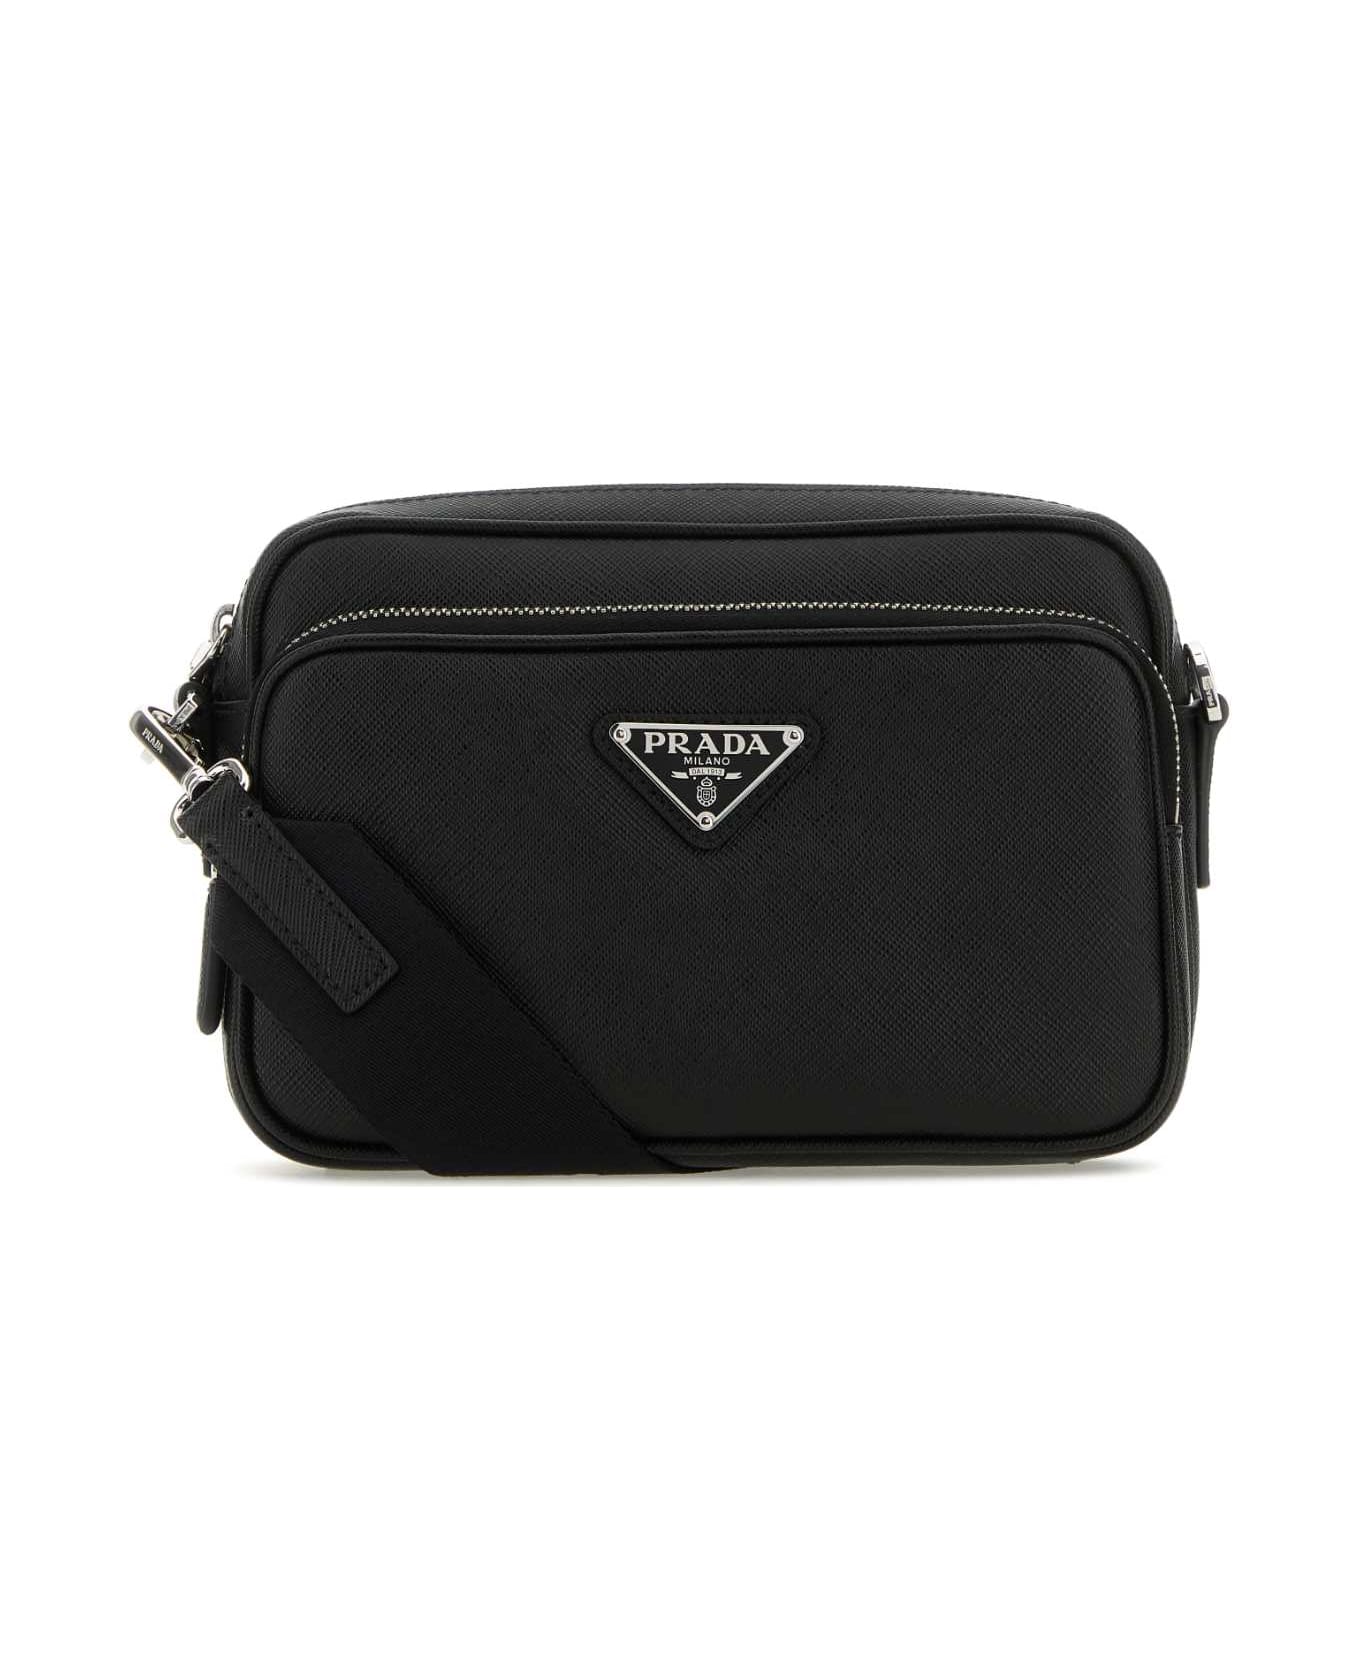 Prada Black Leather Crossbody Bag - NERO ショルダーバッグ